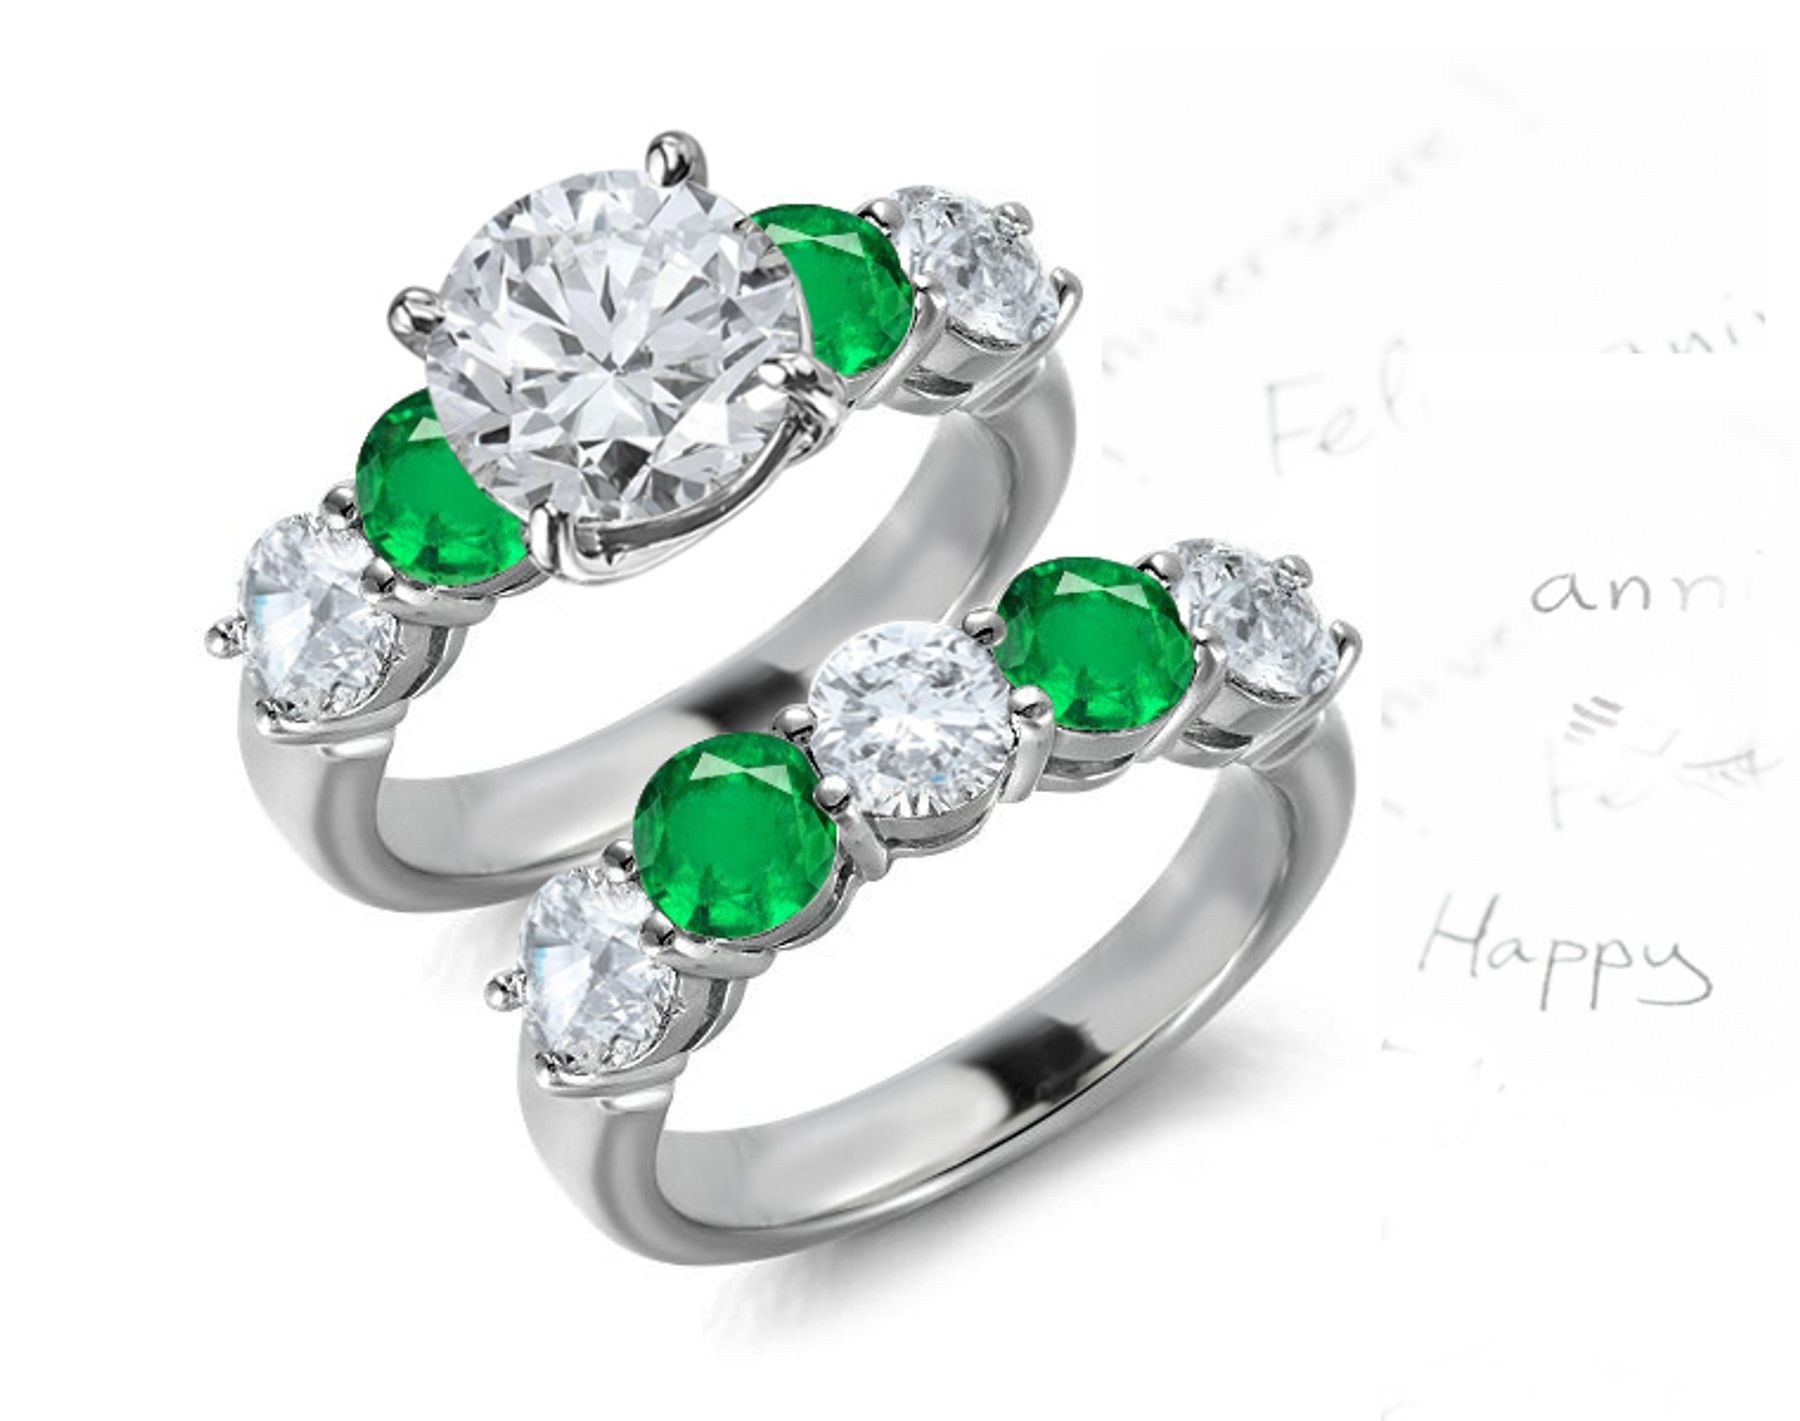 Importer of Diamonds: This New 5 Stone Anniversary Ring with 5 Diamonds & Emeralds & 5 Stone Eternity Band